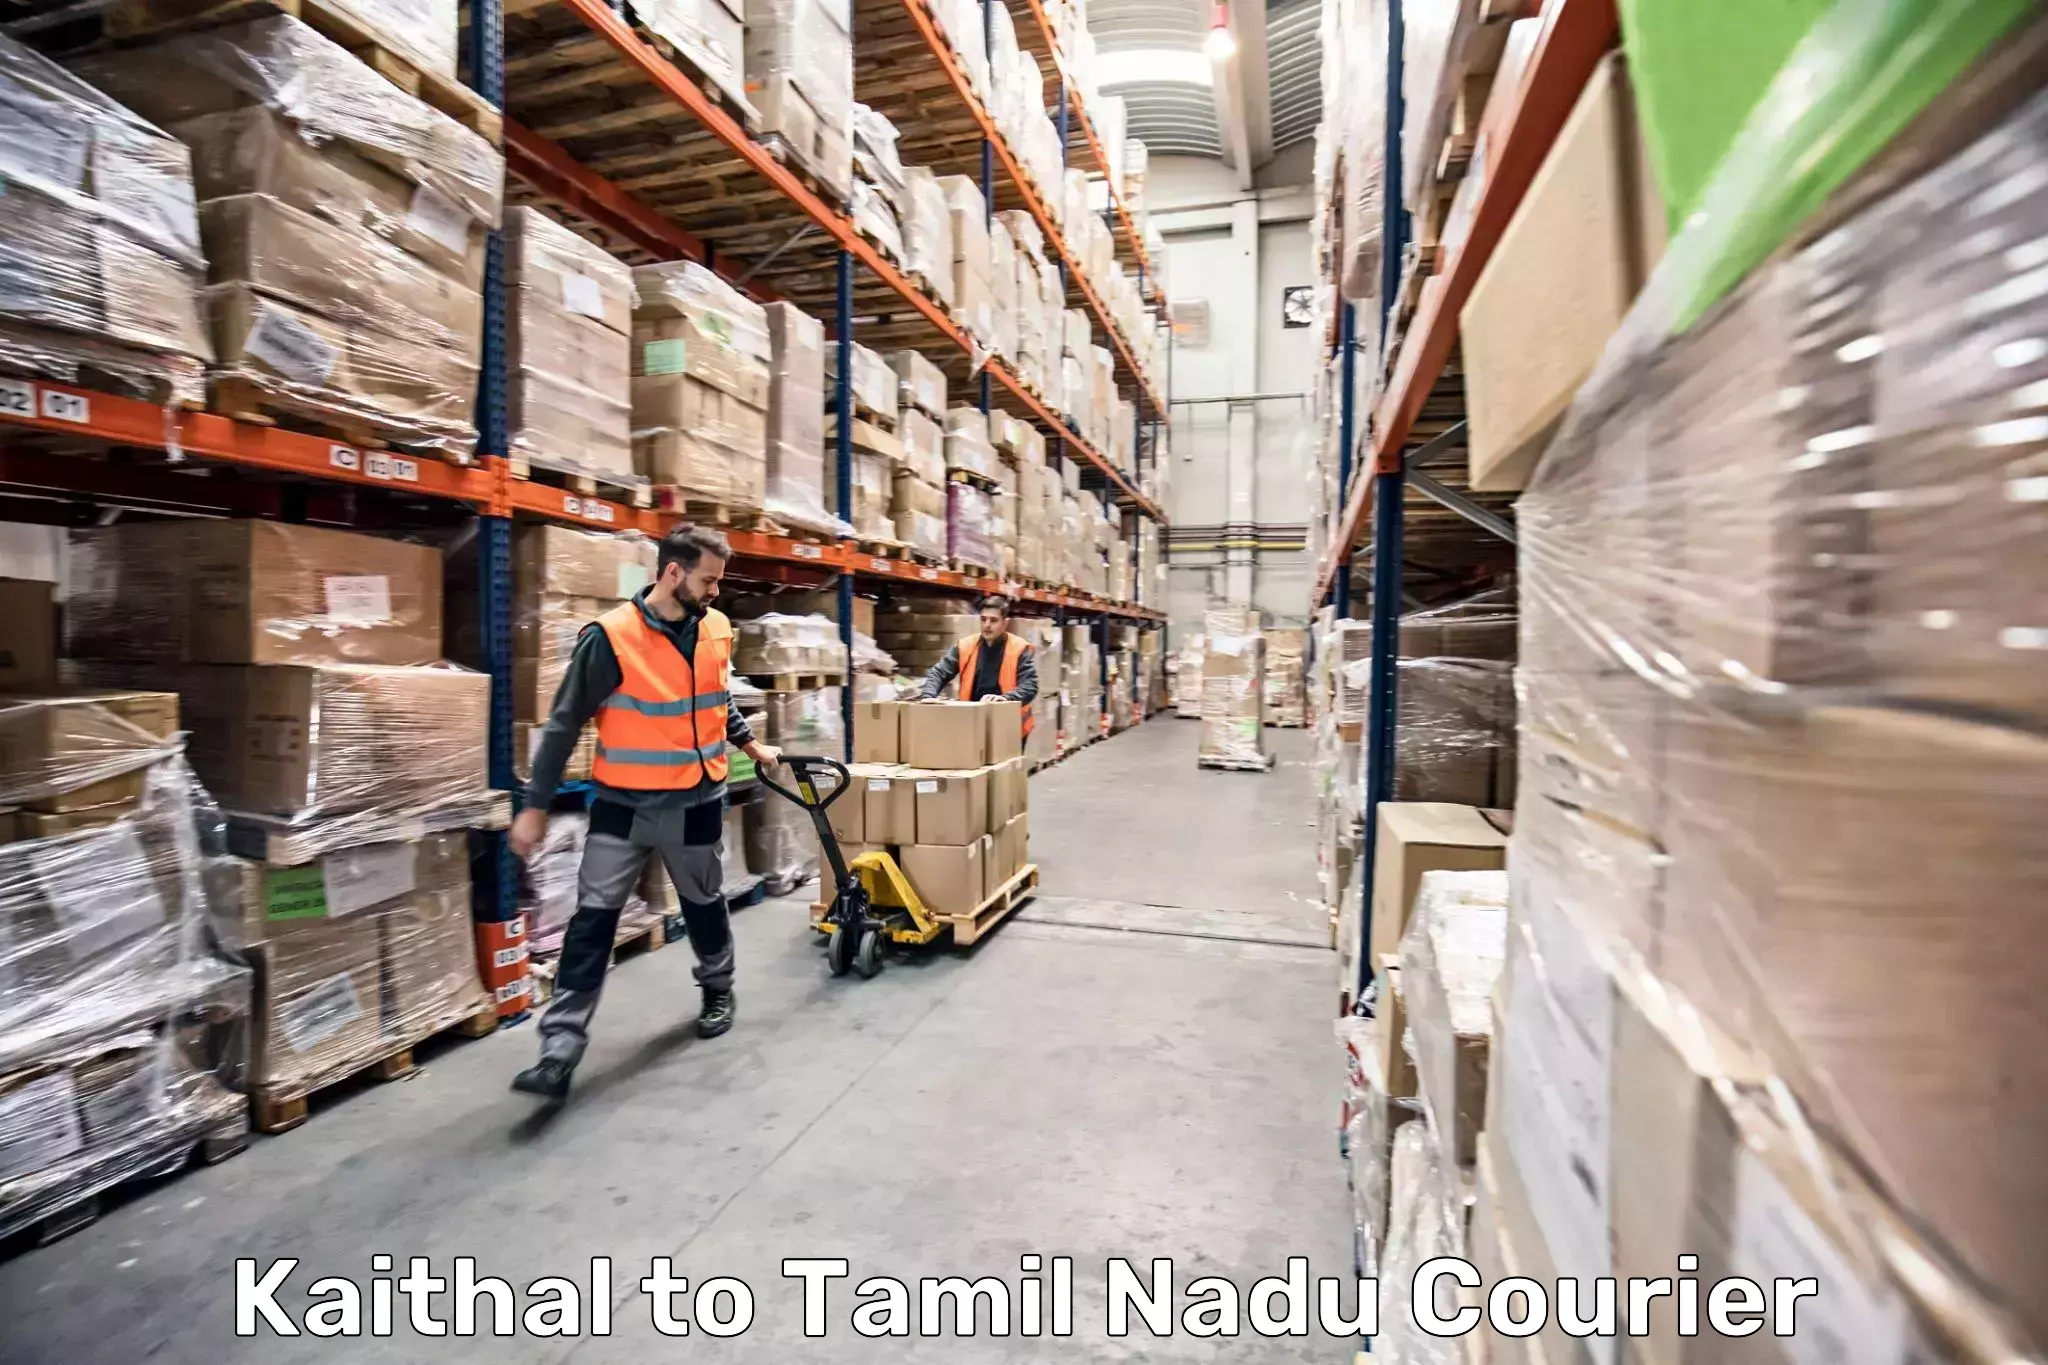 Luggage transport company Kaithal to Chennai Port